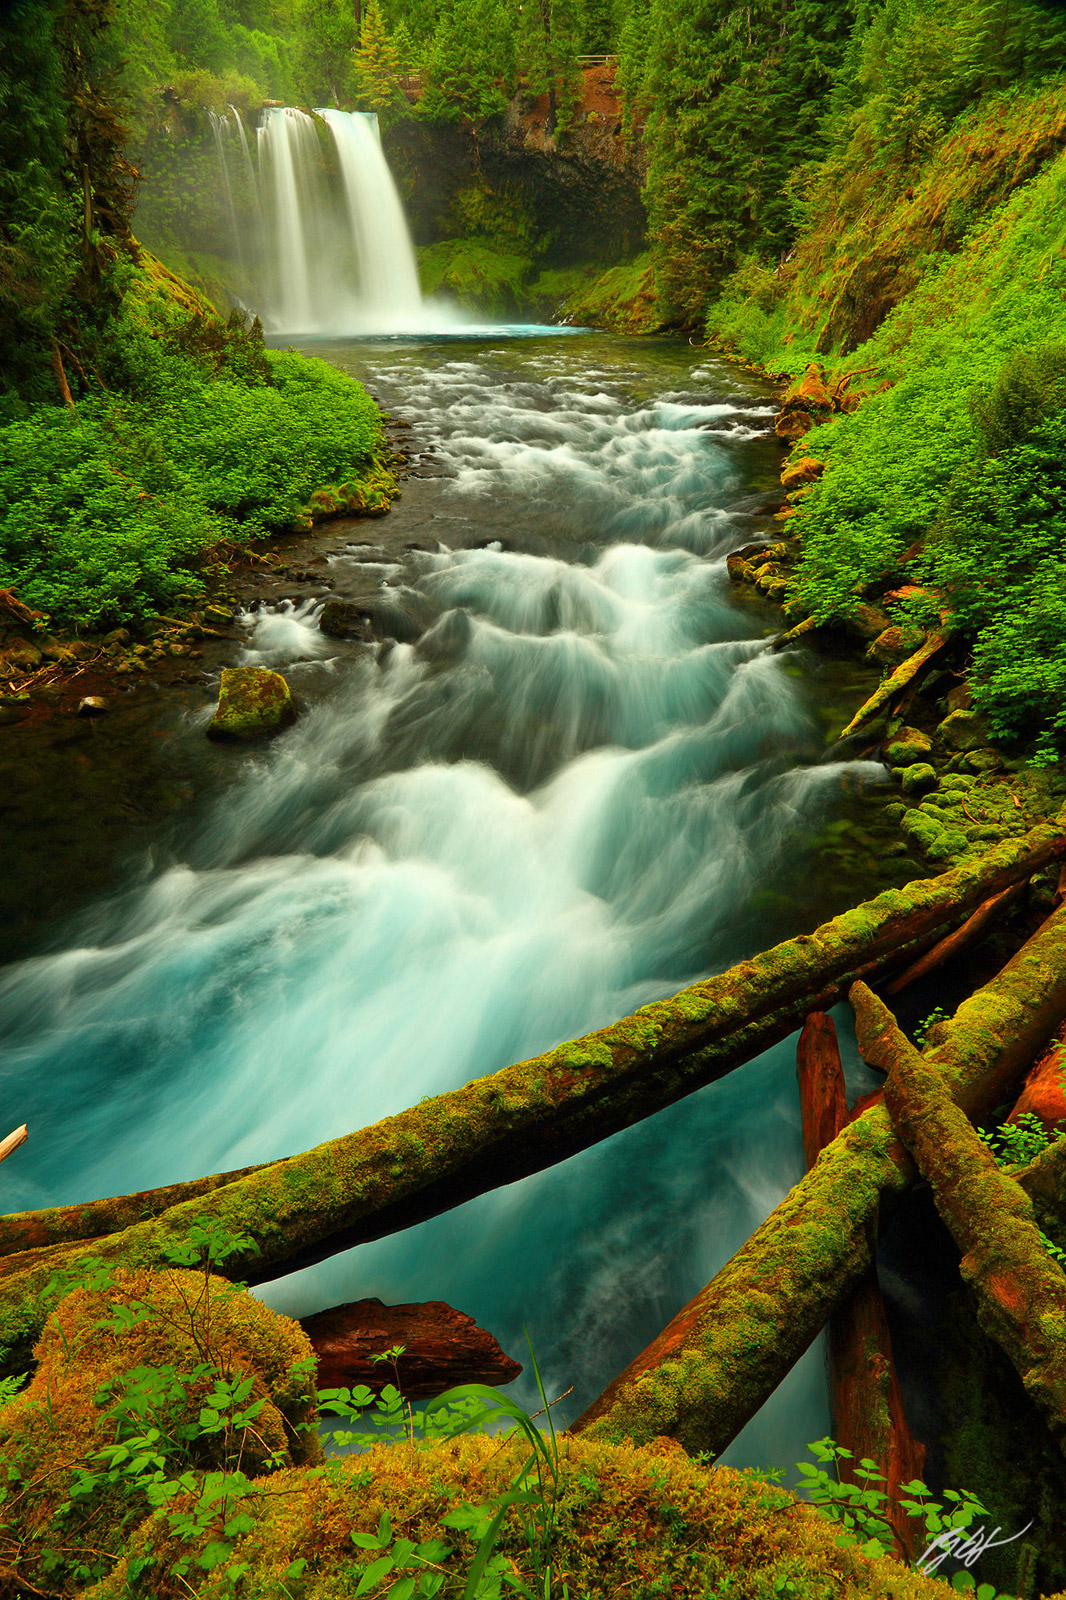 Koosah Falls on the McKenzie River in the Willamette National Forest in Oregon